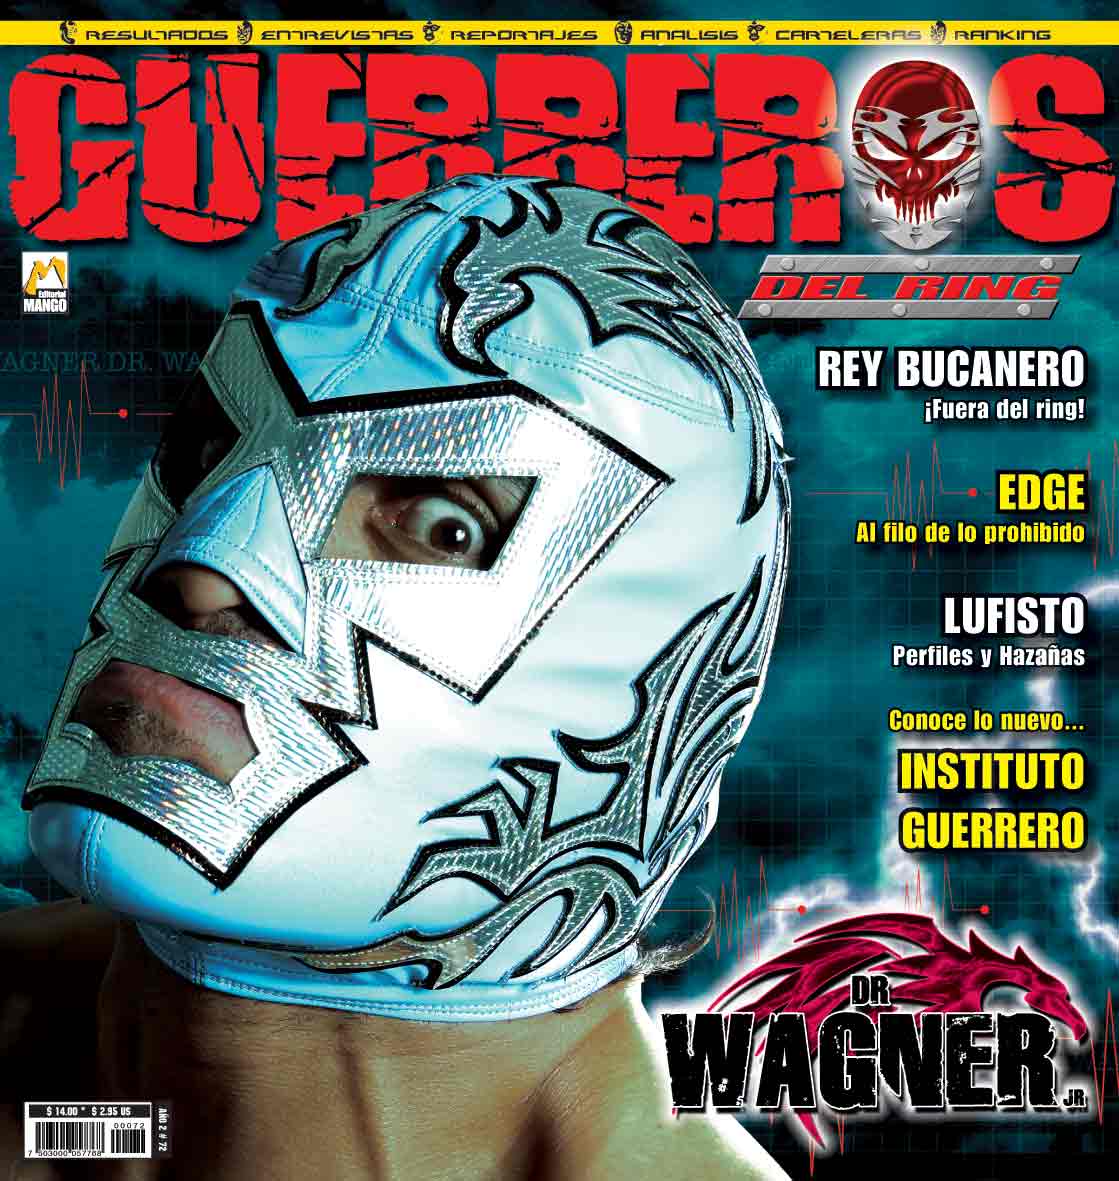 Guerreros Del Ring Volume 72